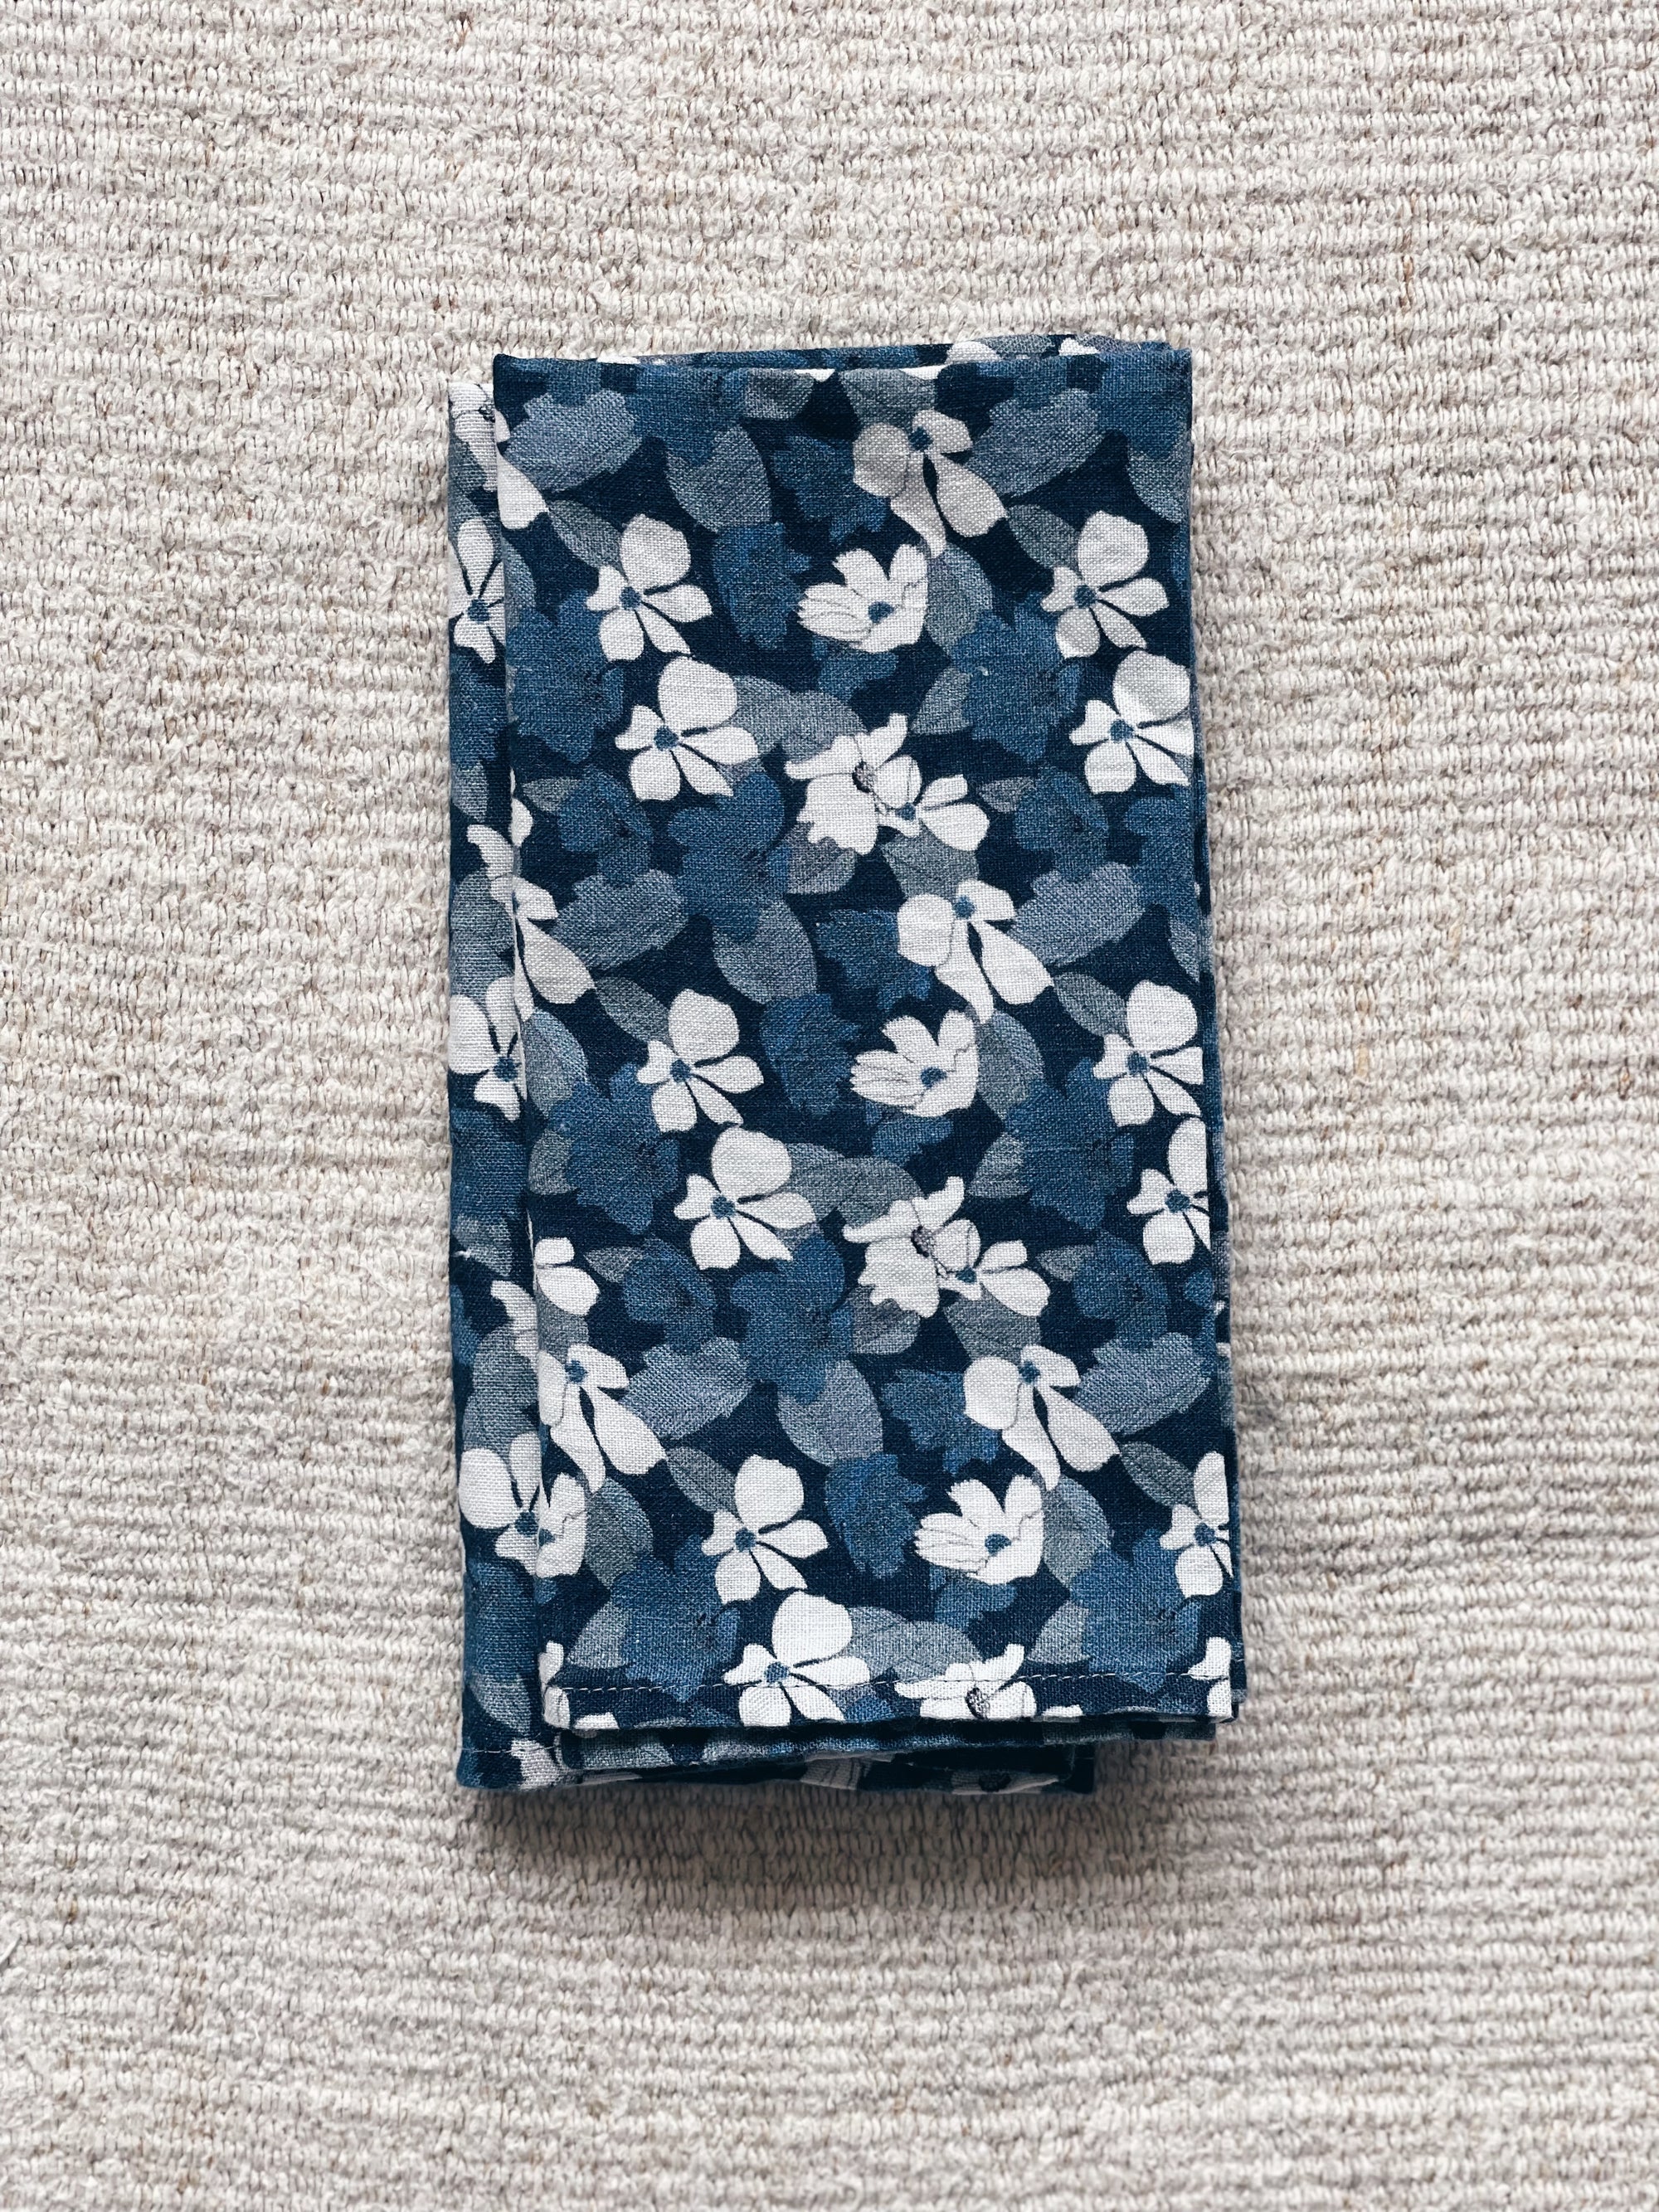 Blue Floral Linen Napkins